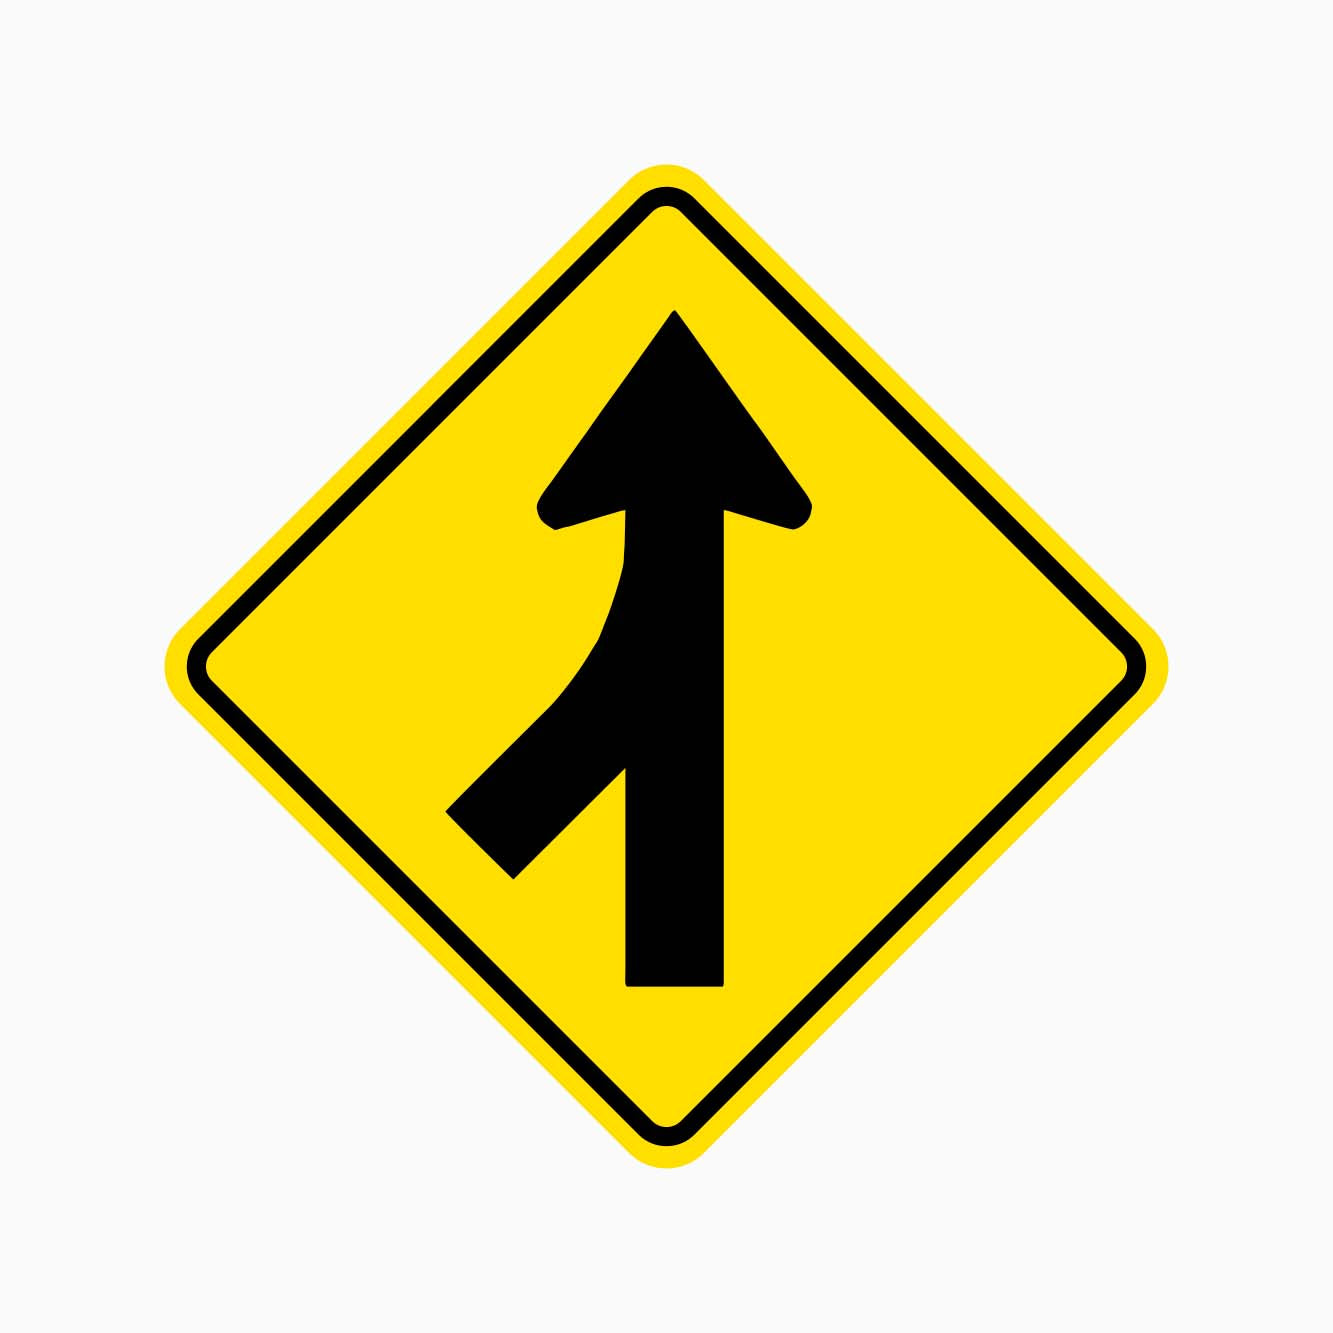 Merging Traffic Left Sign W5-34 L